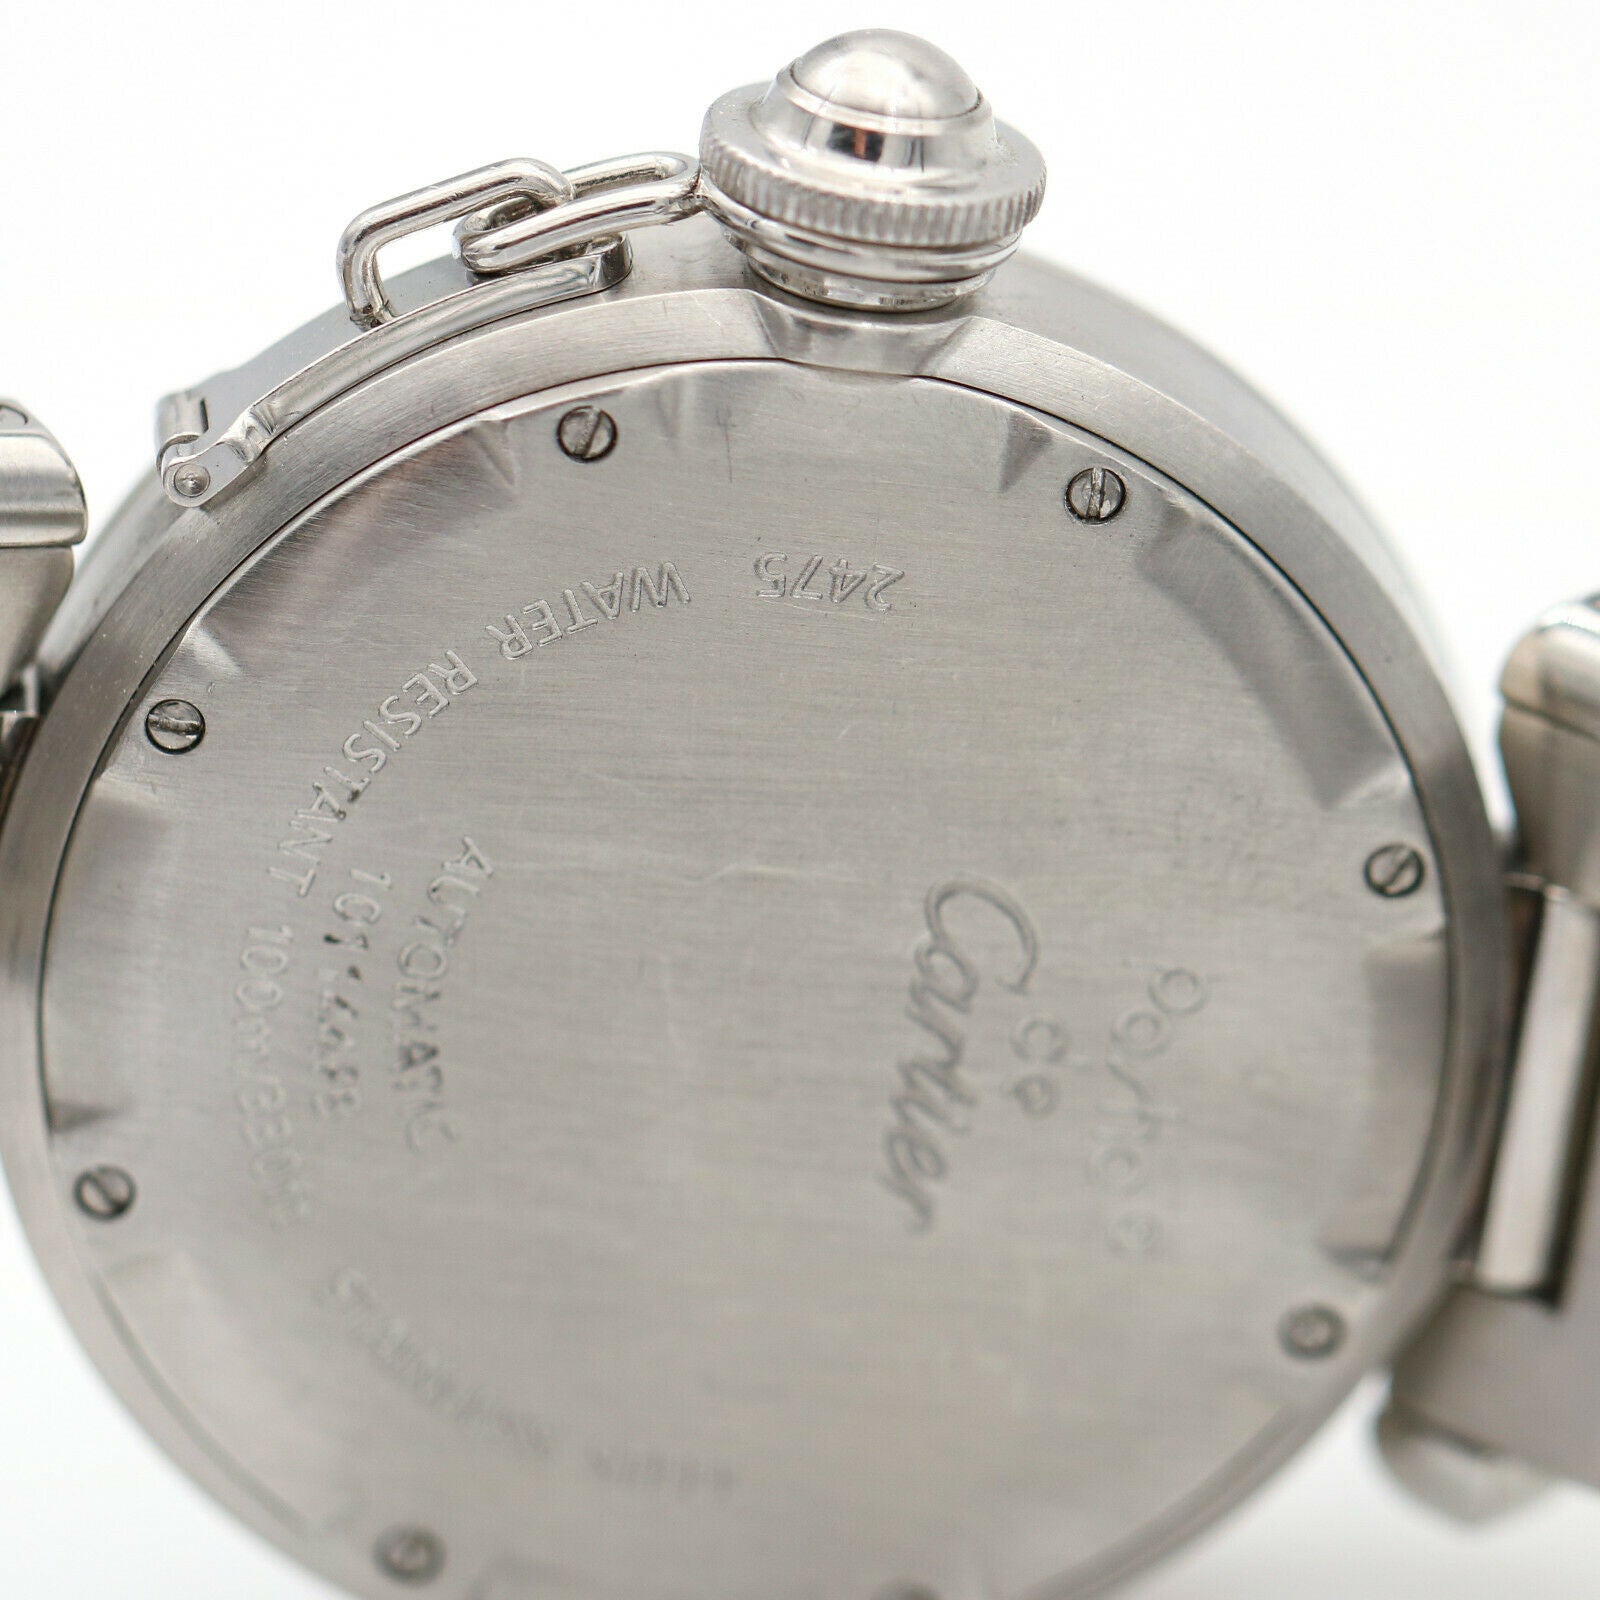 Pasha de Cartier Custom Diamond Bezel Pink Dial Watch W31075M7